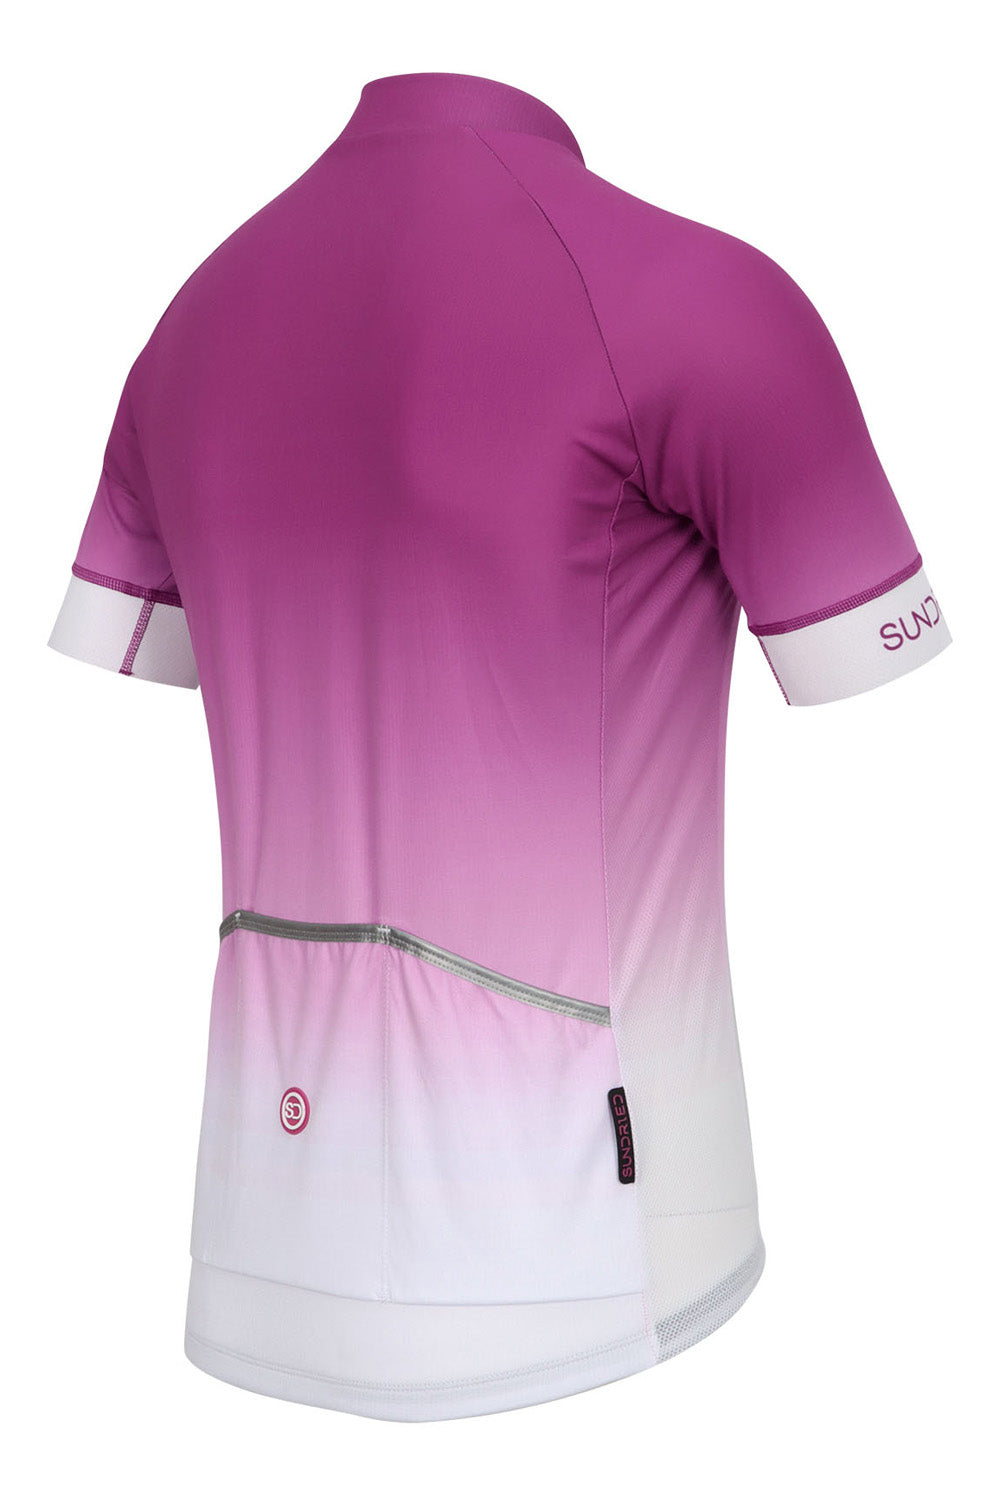 Sundried Fade Pink Men's Short Sleeve Cycle Jersey Short Sleeve Jersey Activewear